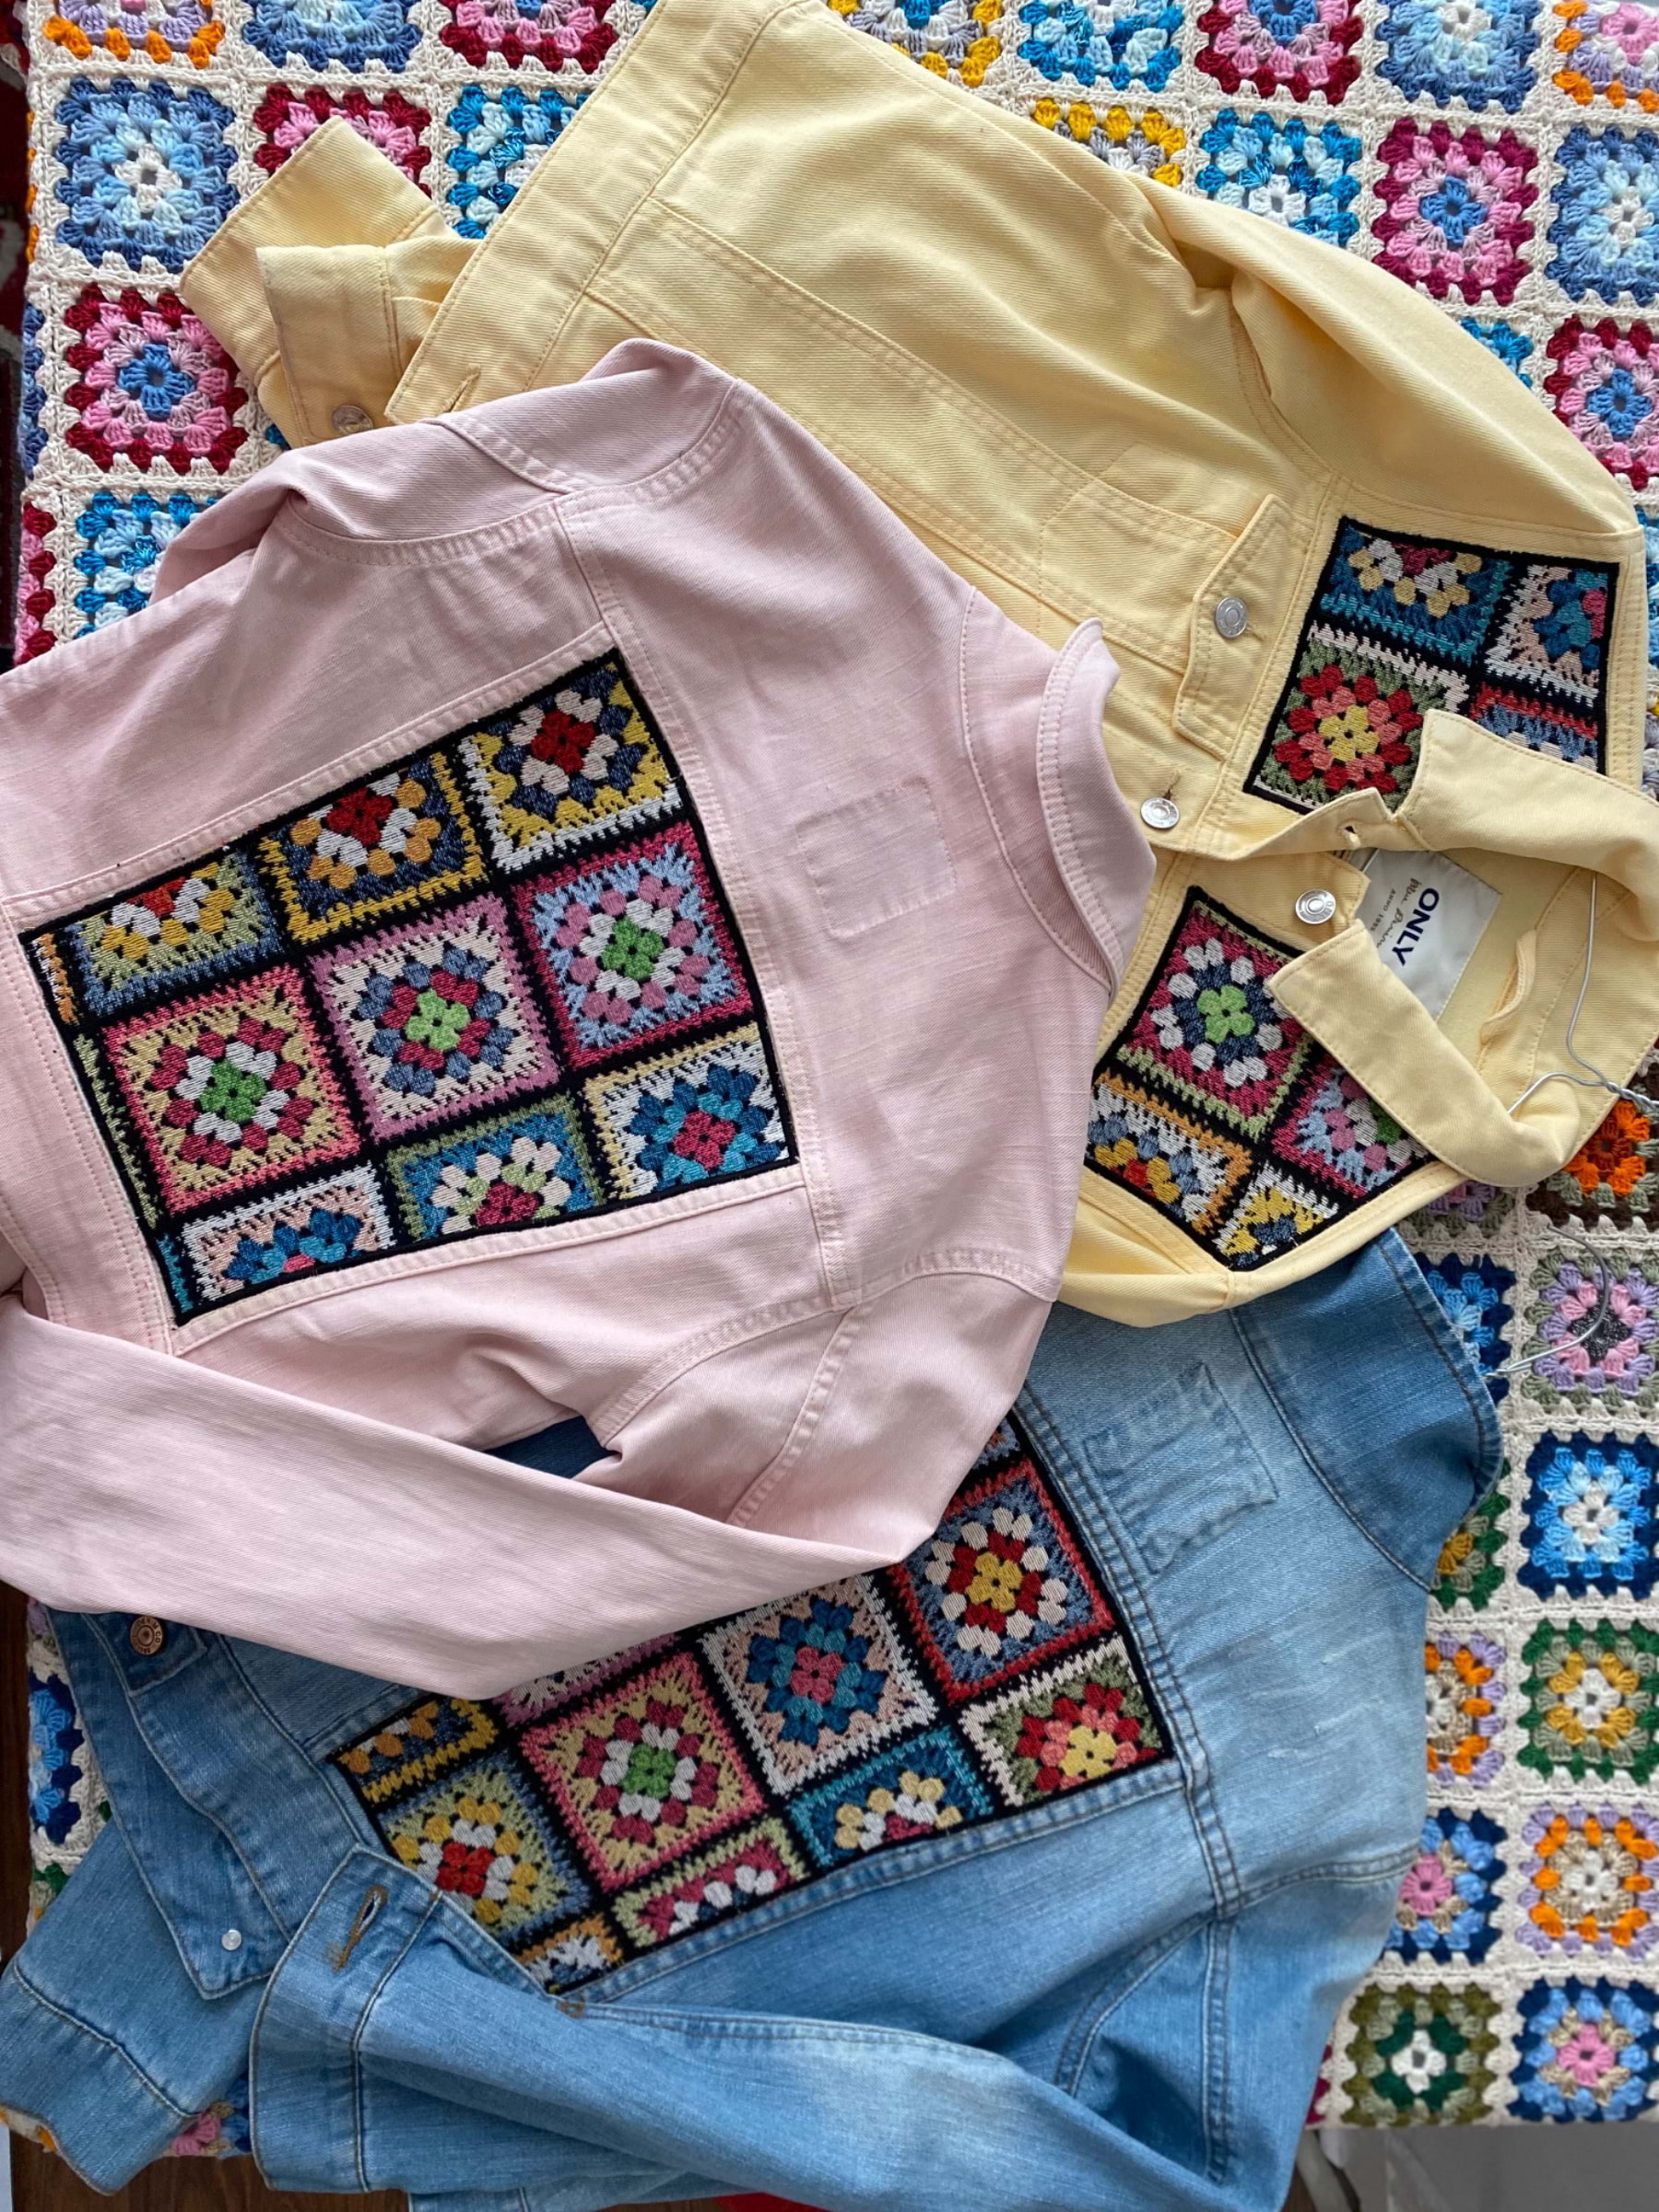 2nd hand denim jackets upcycled with embroideries and Granny Square textile. – Bild från Kuddkonst av Ann-Margreth L. (2023-04-27)